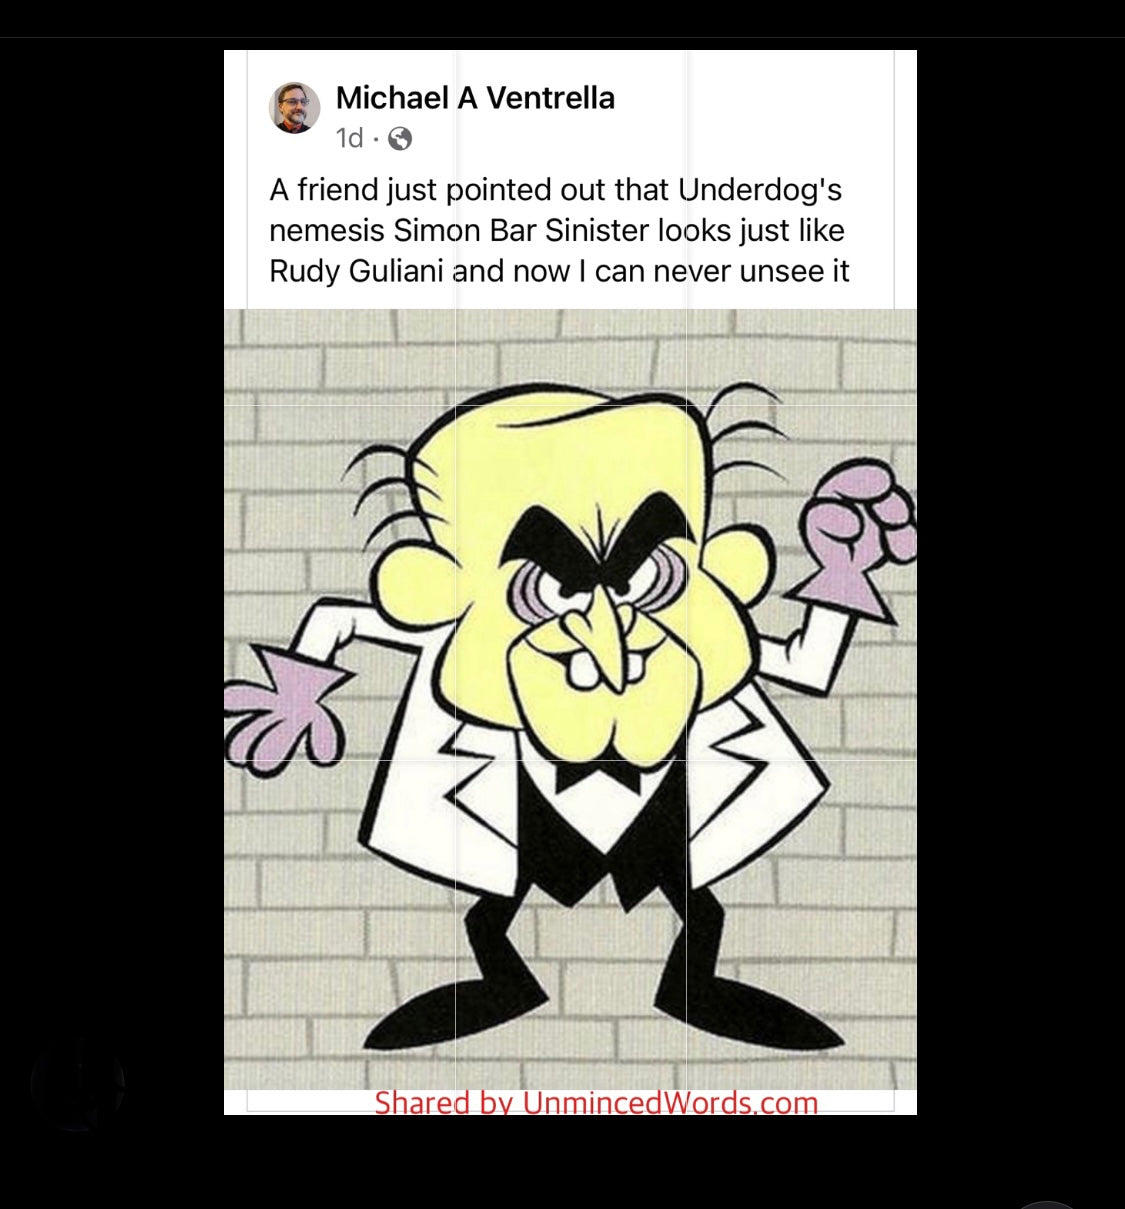 Simon Bar Sinister looks just like Rudy Giuliani